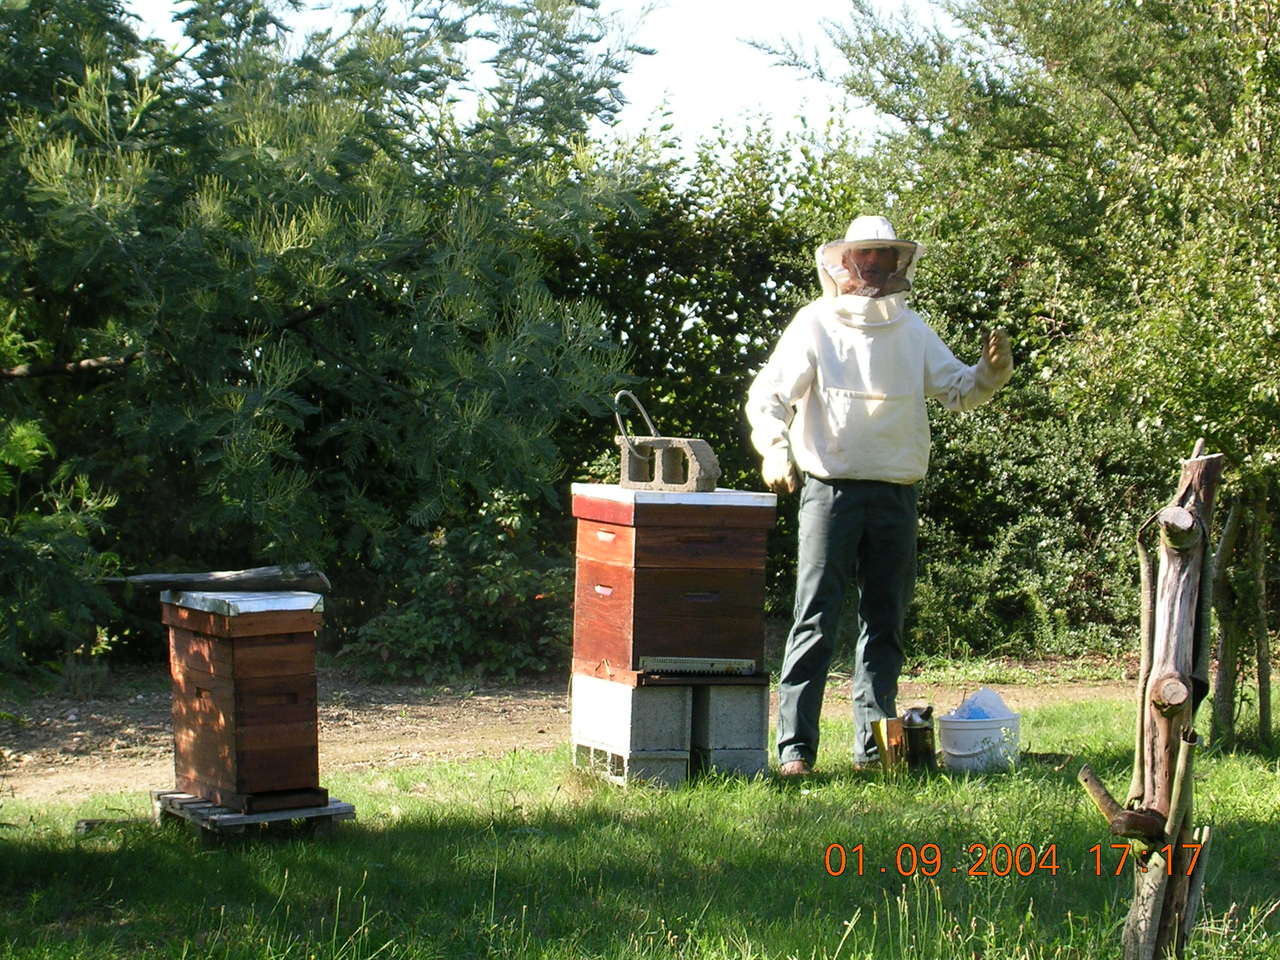 Un apiculteur